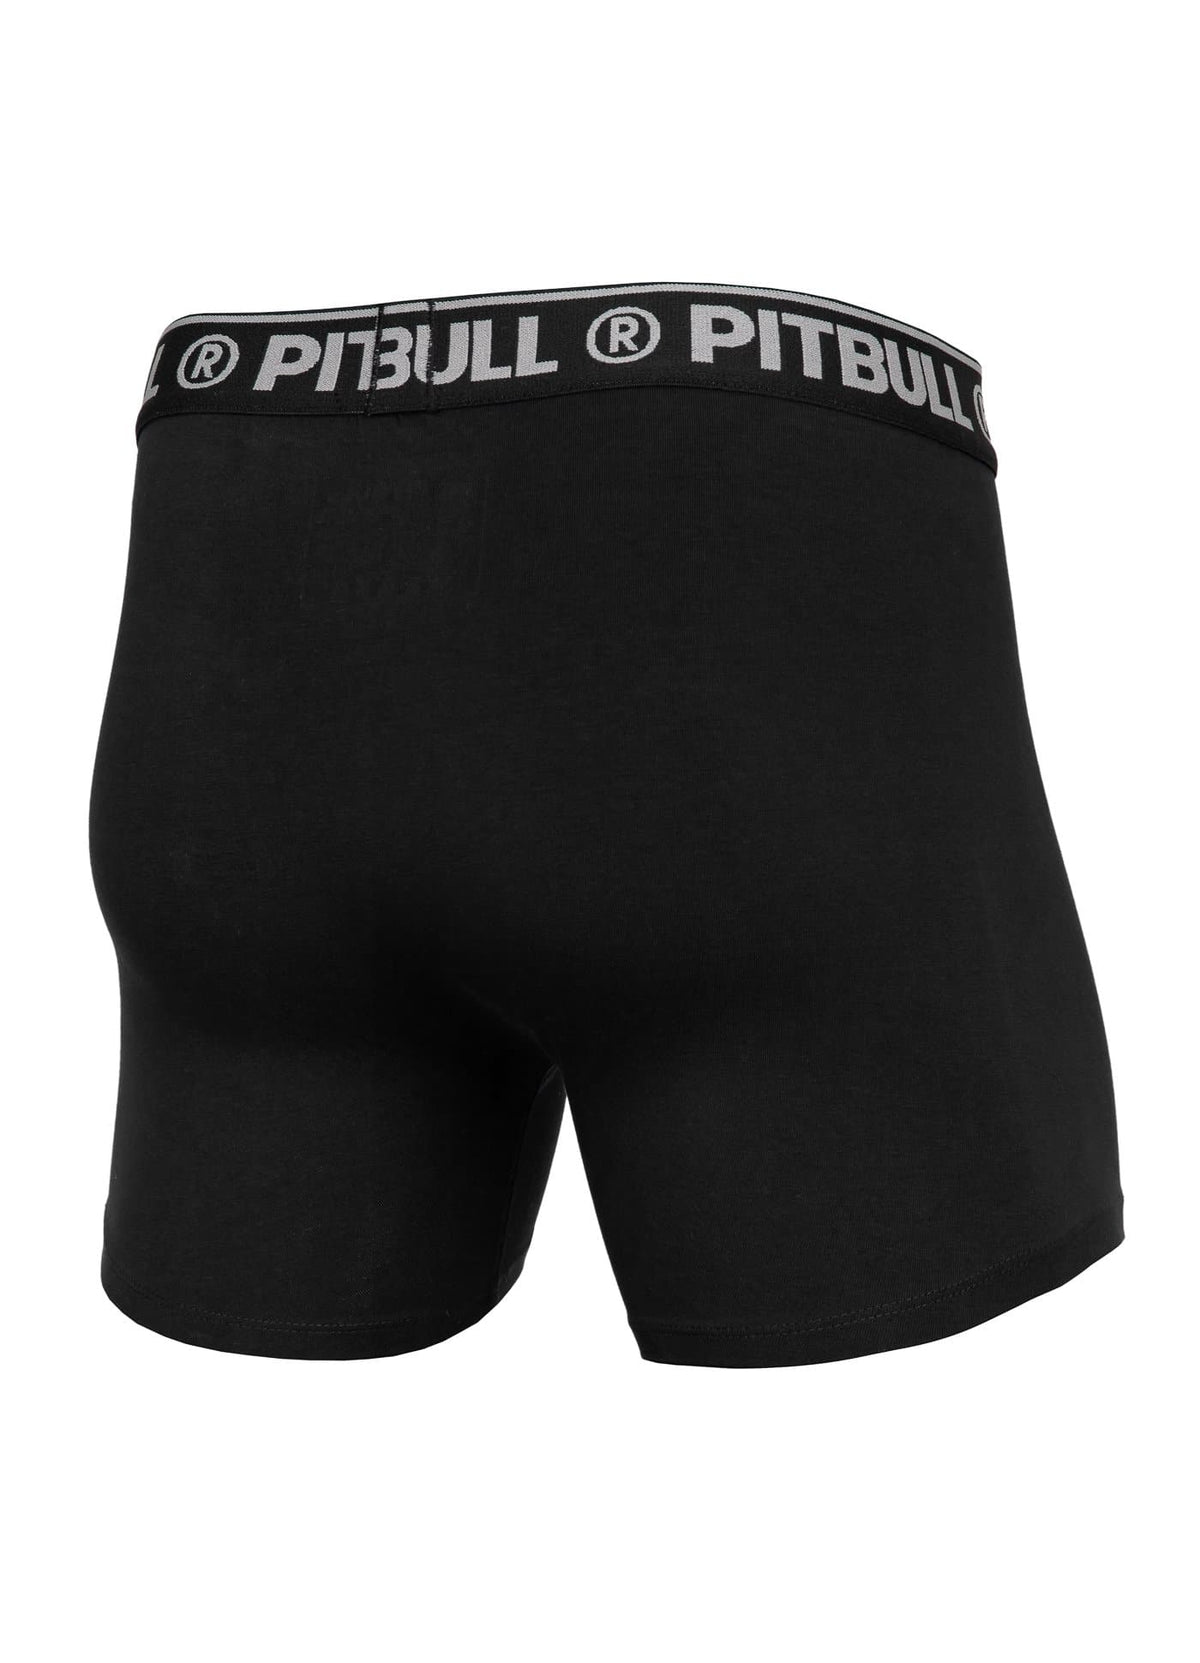 Boxer Shorts VI 3pack Dark Navy/Grey/Black - Pitbull West Coast International Store 